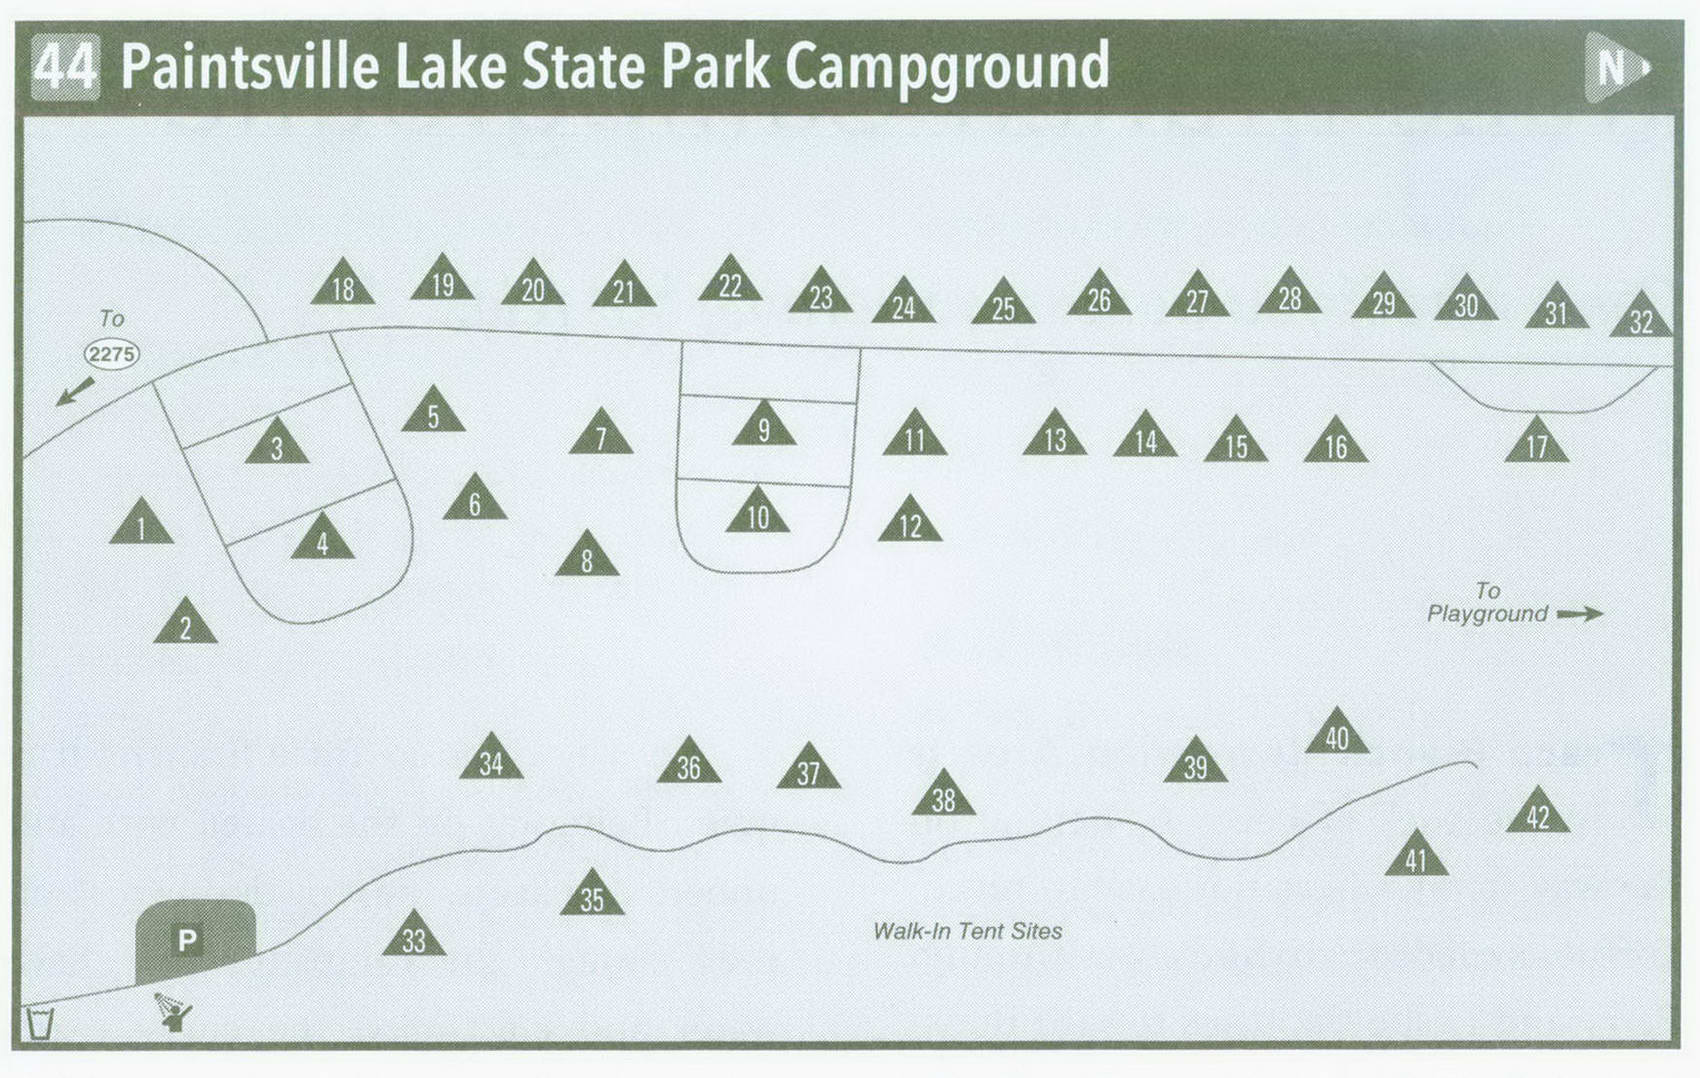 Plan of Paintsville Lake State Park Campground